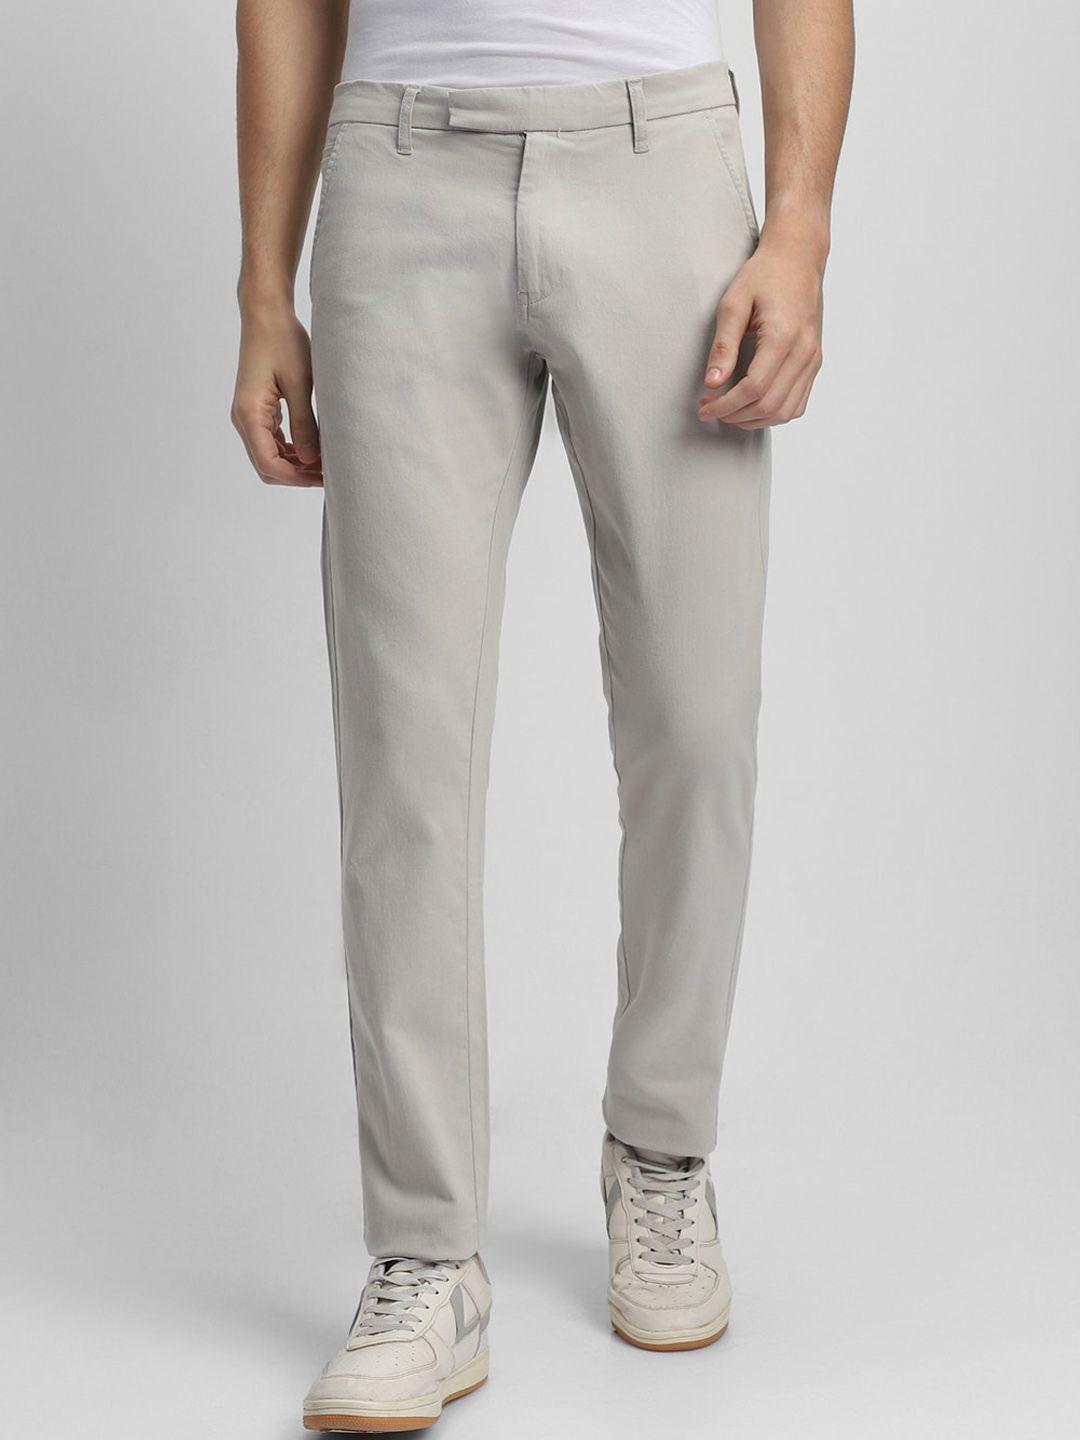 dennis-lingo-men-slim-fit-wrinkle-free-chinos-trousers